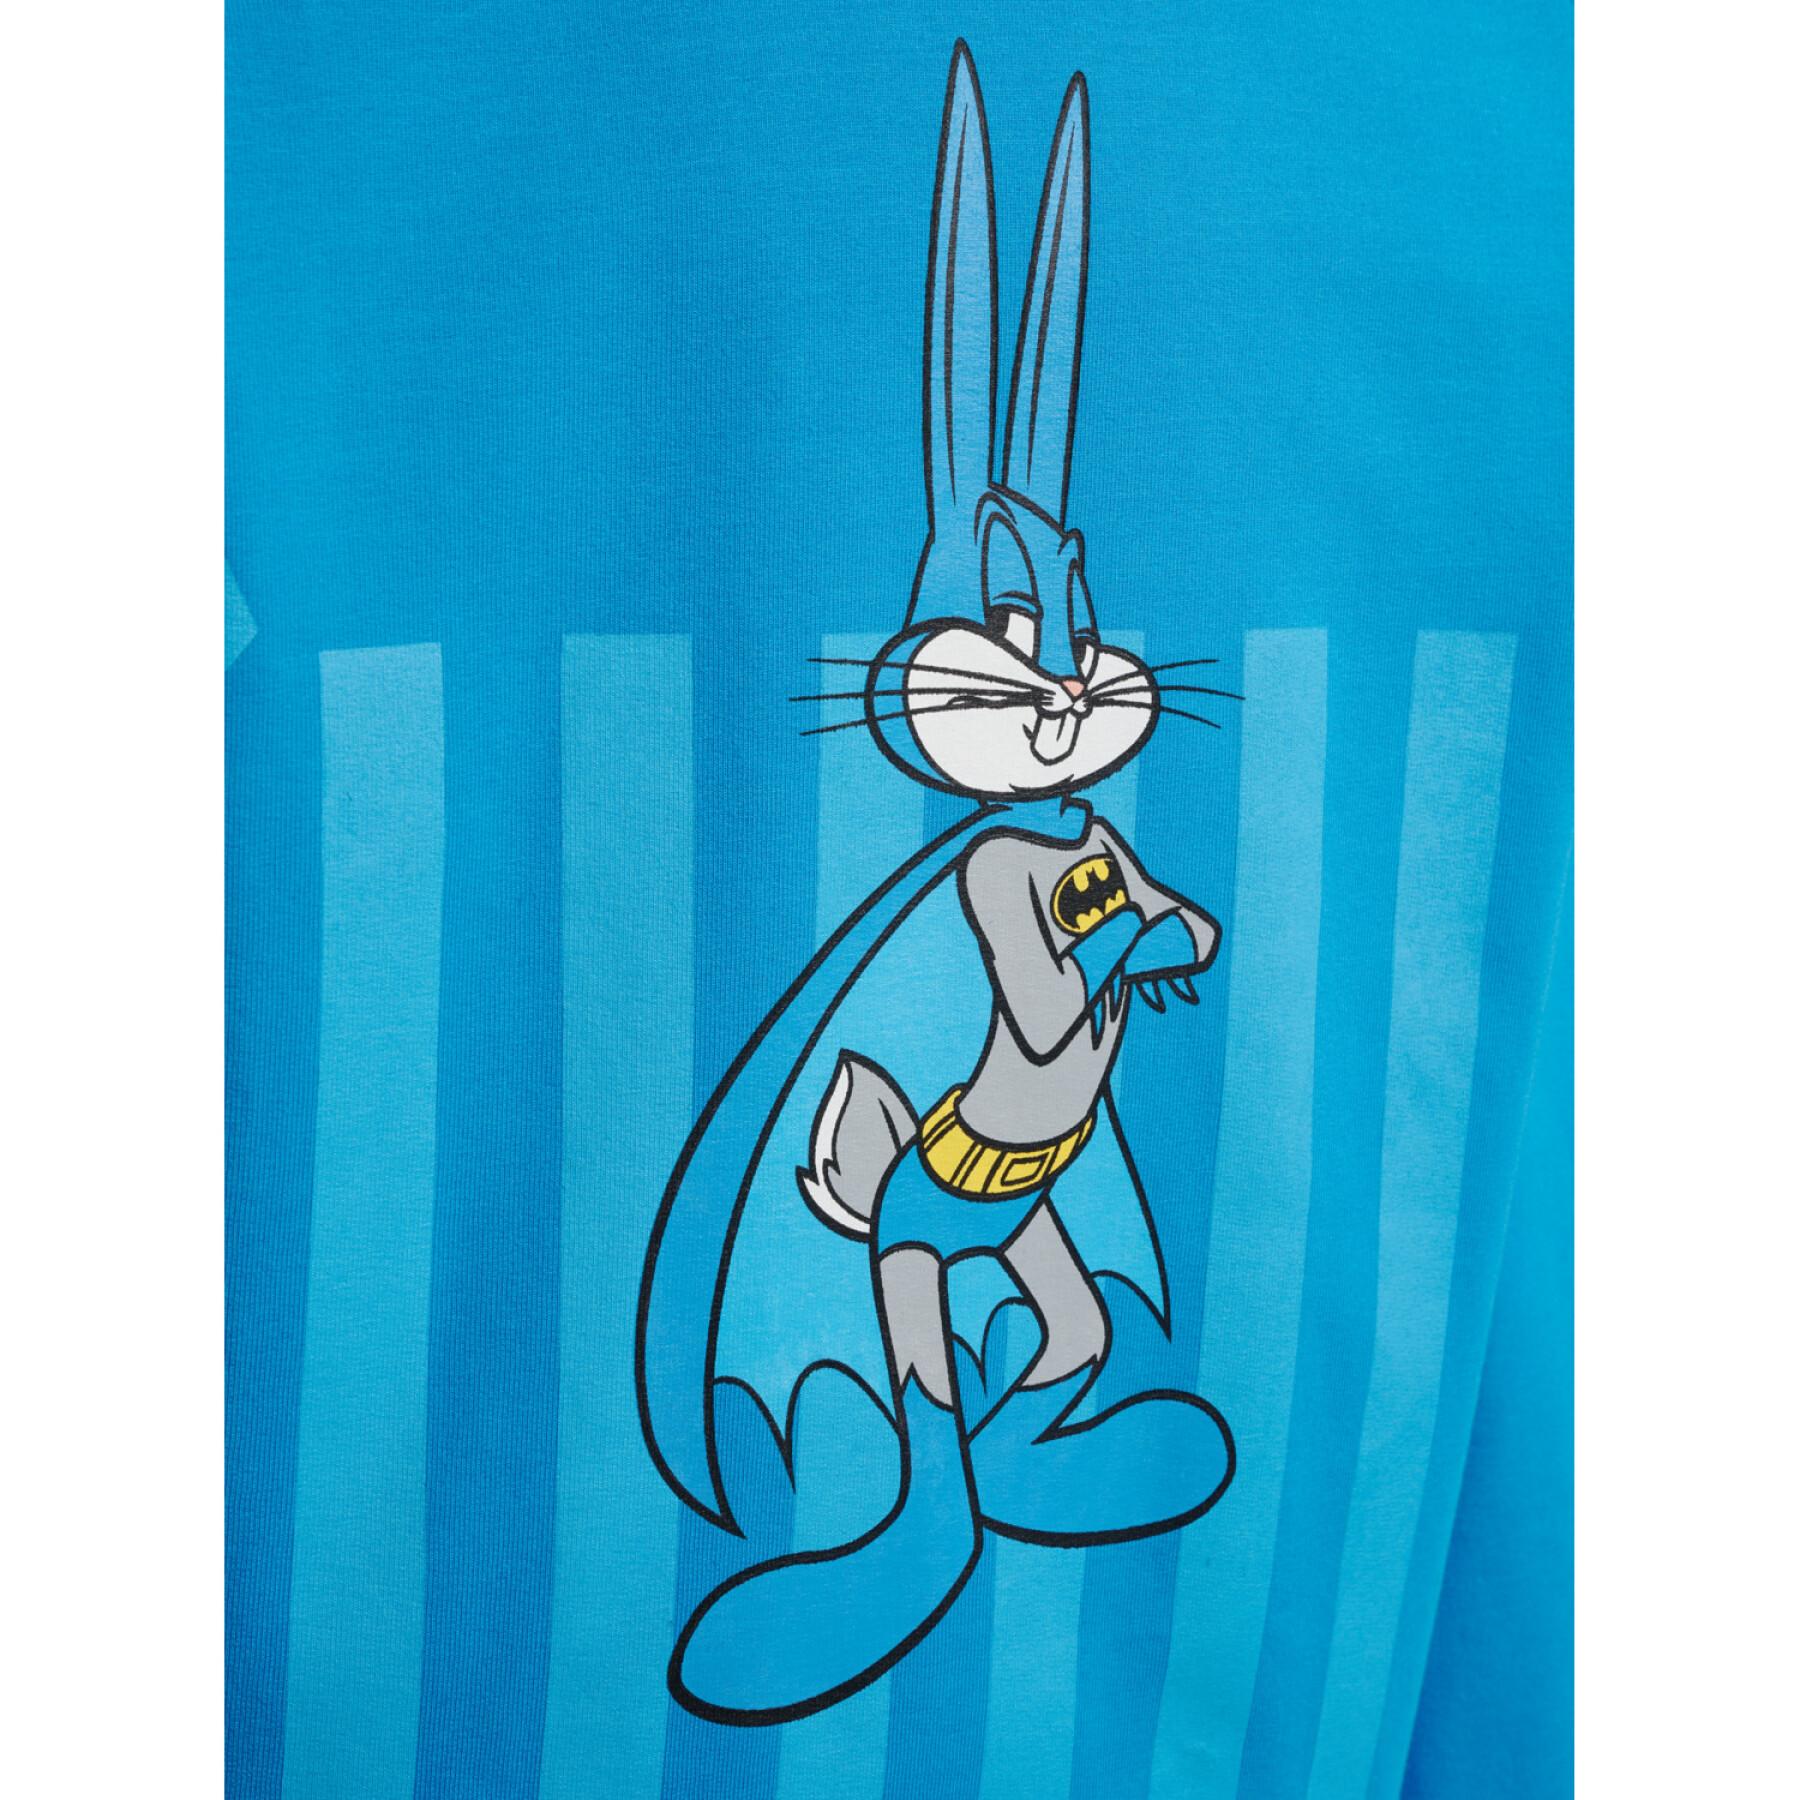 Sudadera para niños Hummel Bugs Bunny